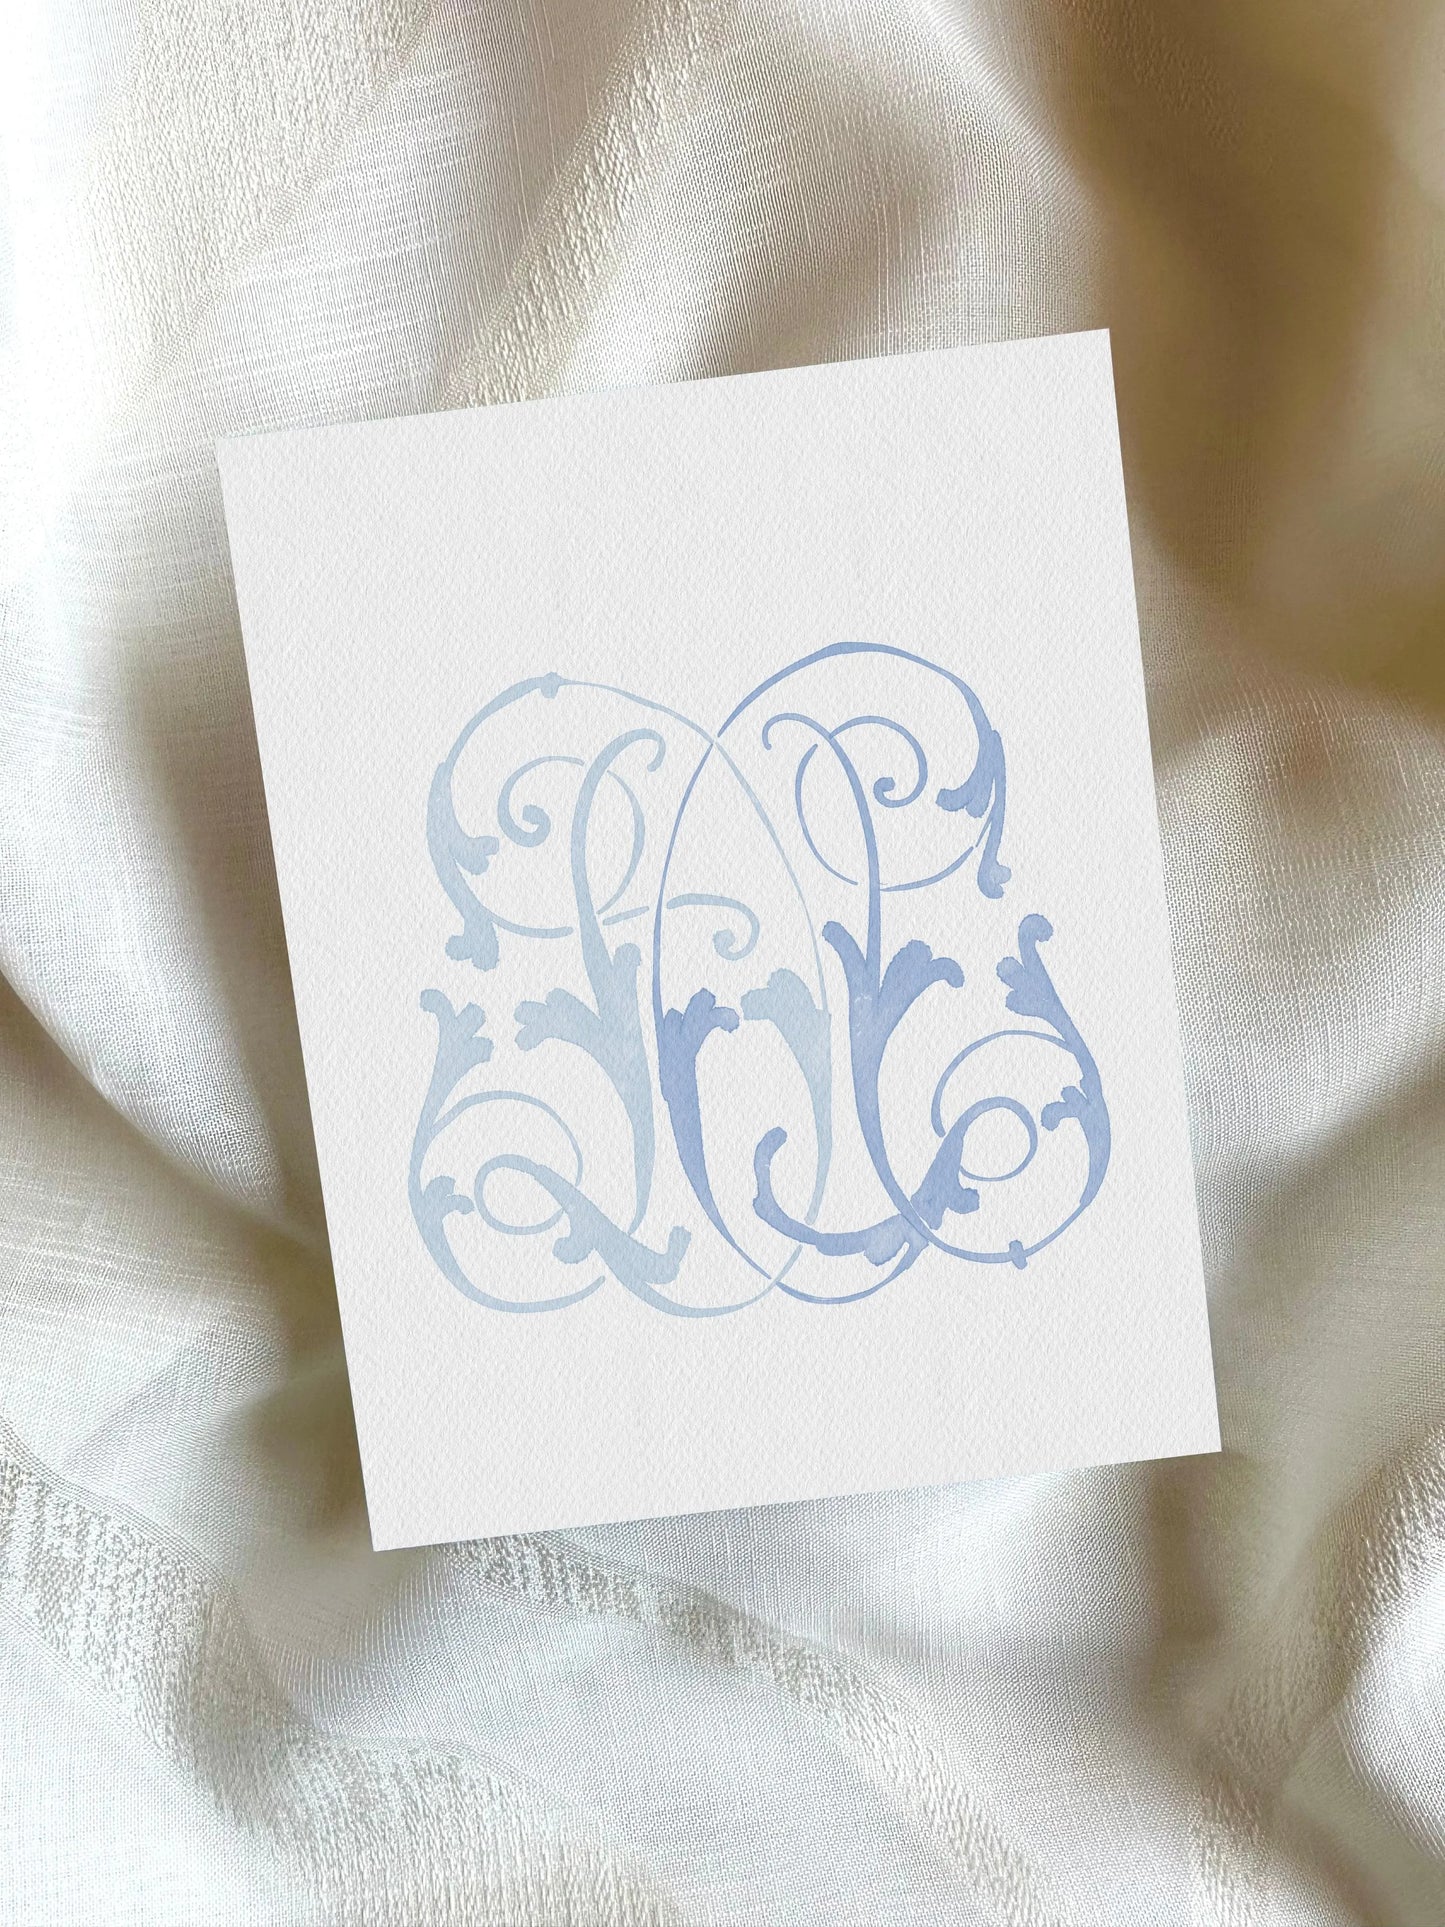 2 Letter Monogram with Letters DD | Digital Download - Wedding Monogram SVG, Personal Logo, Wedding Logo for Wedding Invitations The Wedding Crest Lab